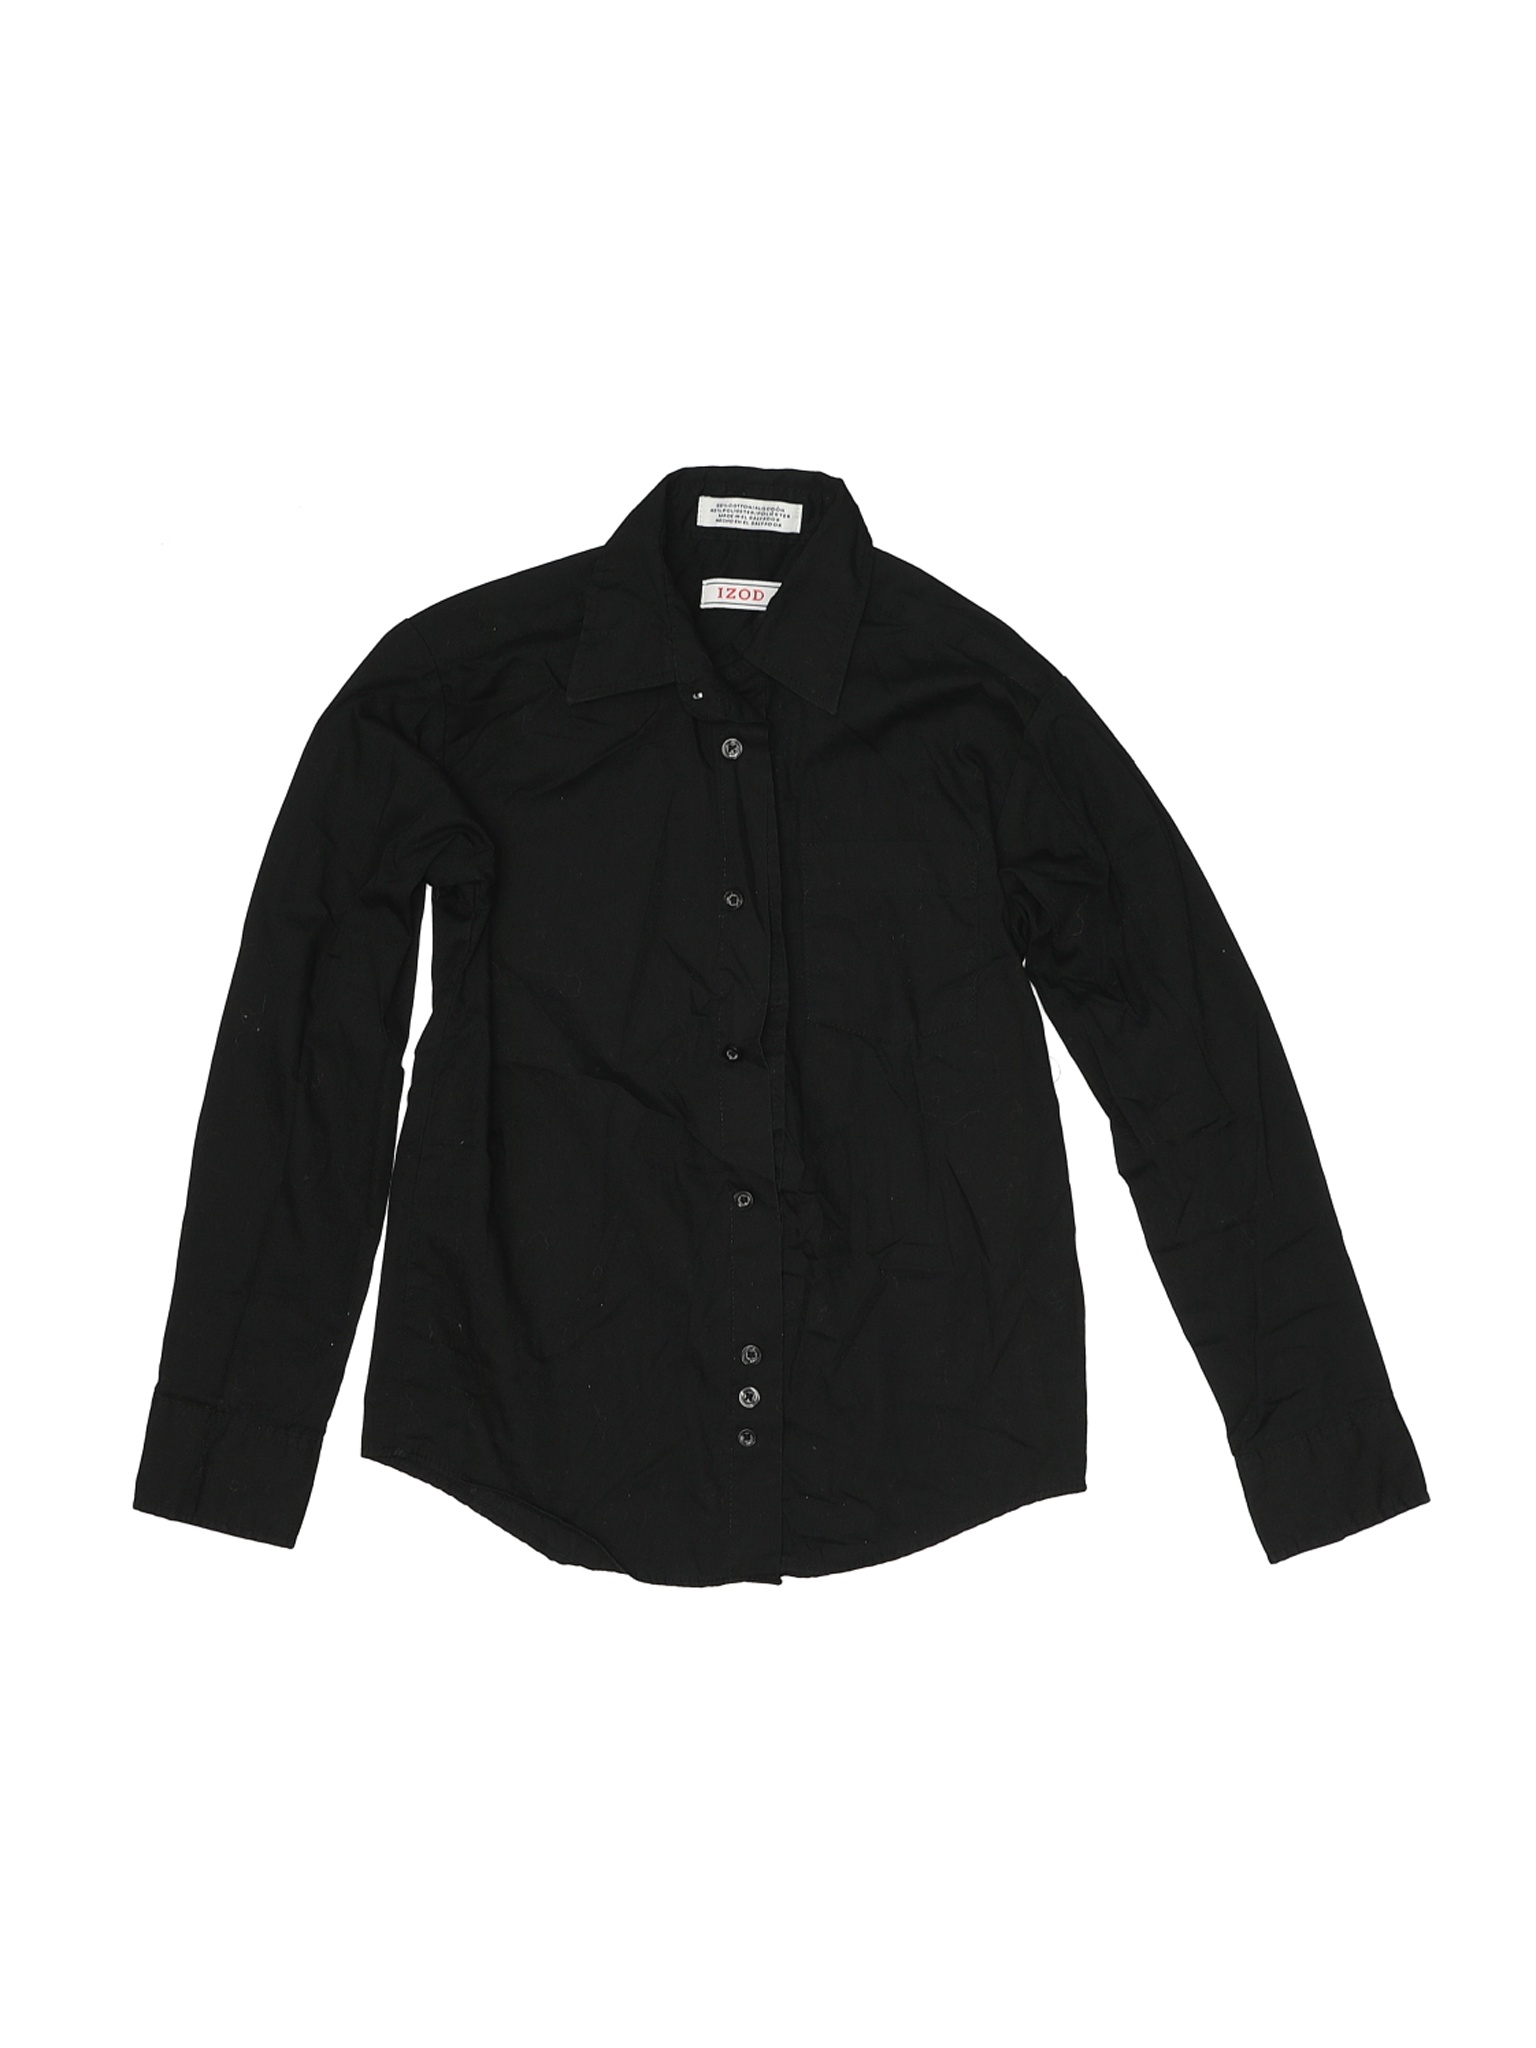 IZOD Boys Black Long Sleeve Button-Down Shirt 8 | eBay